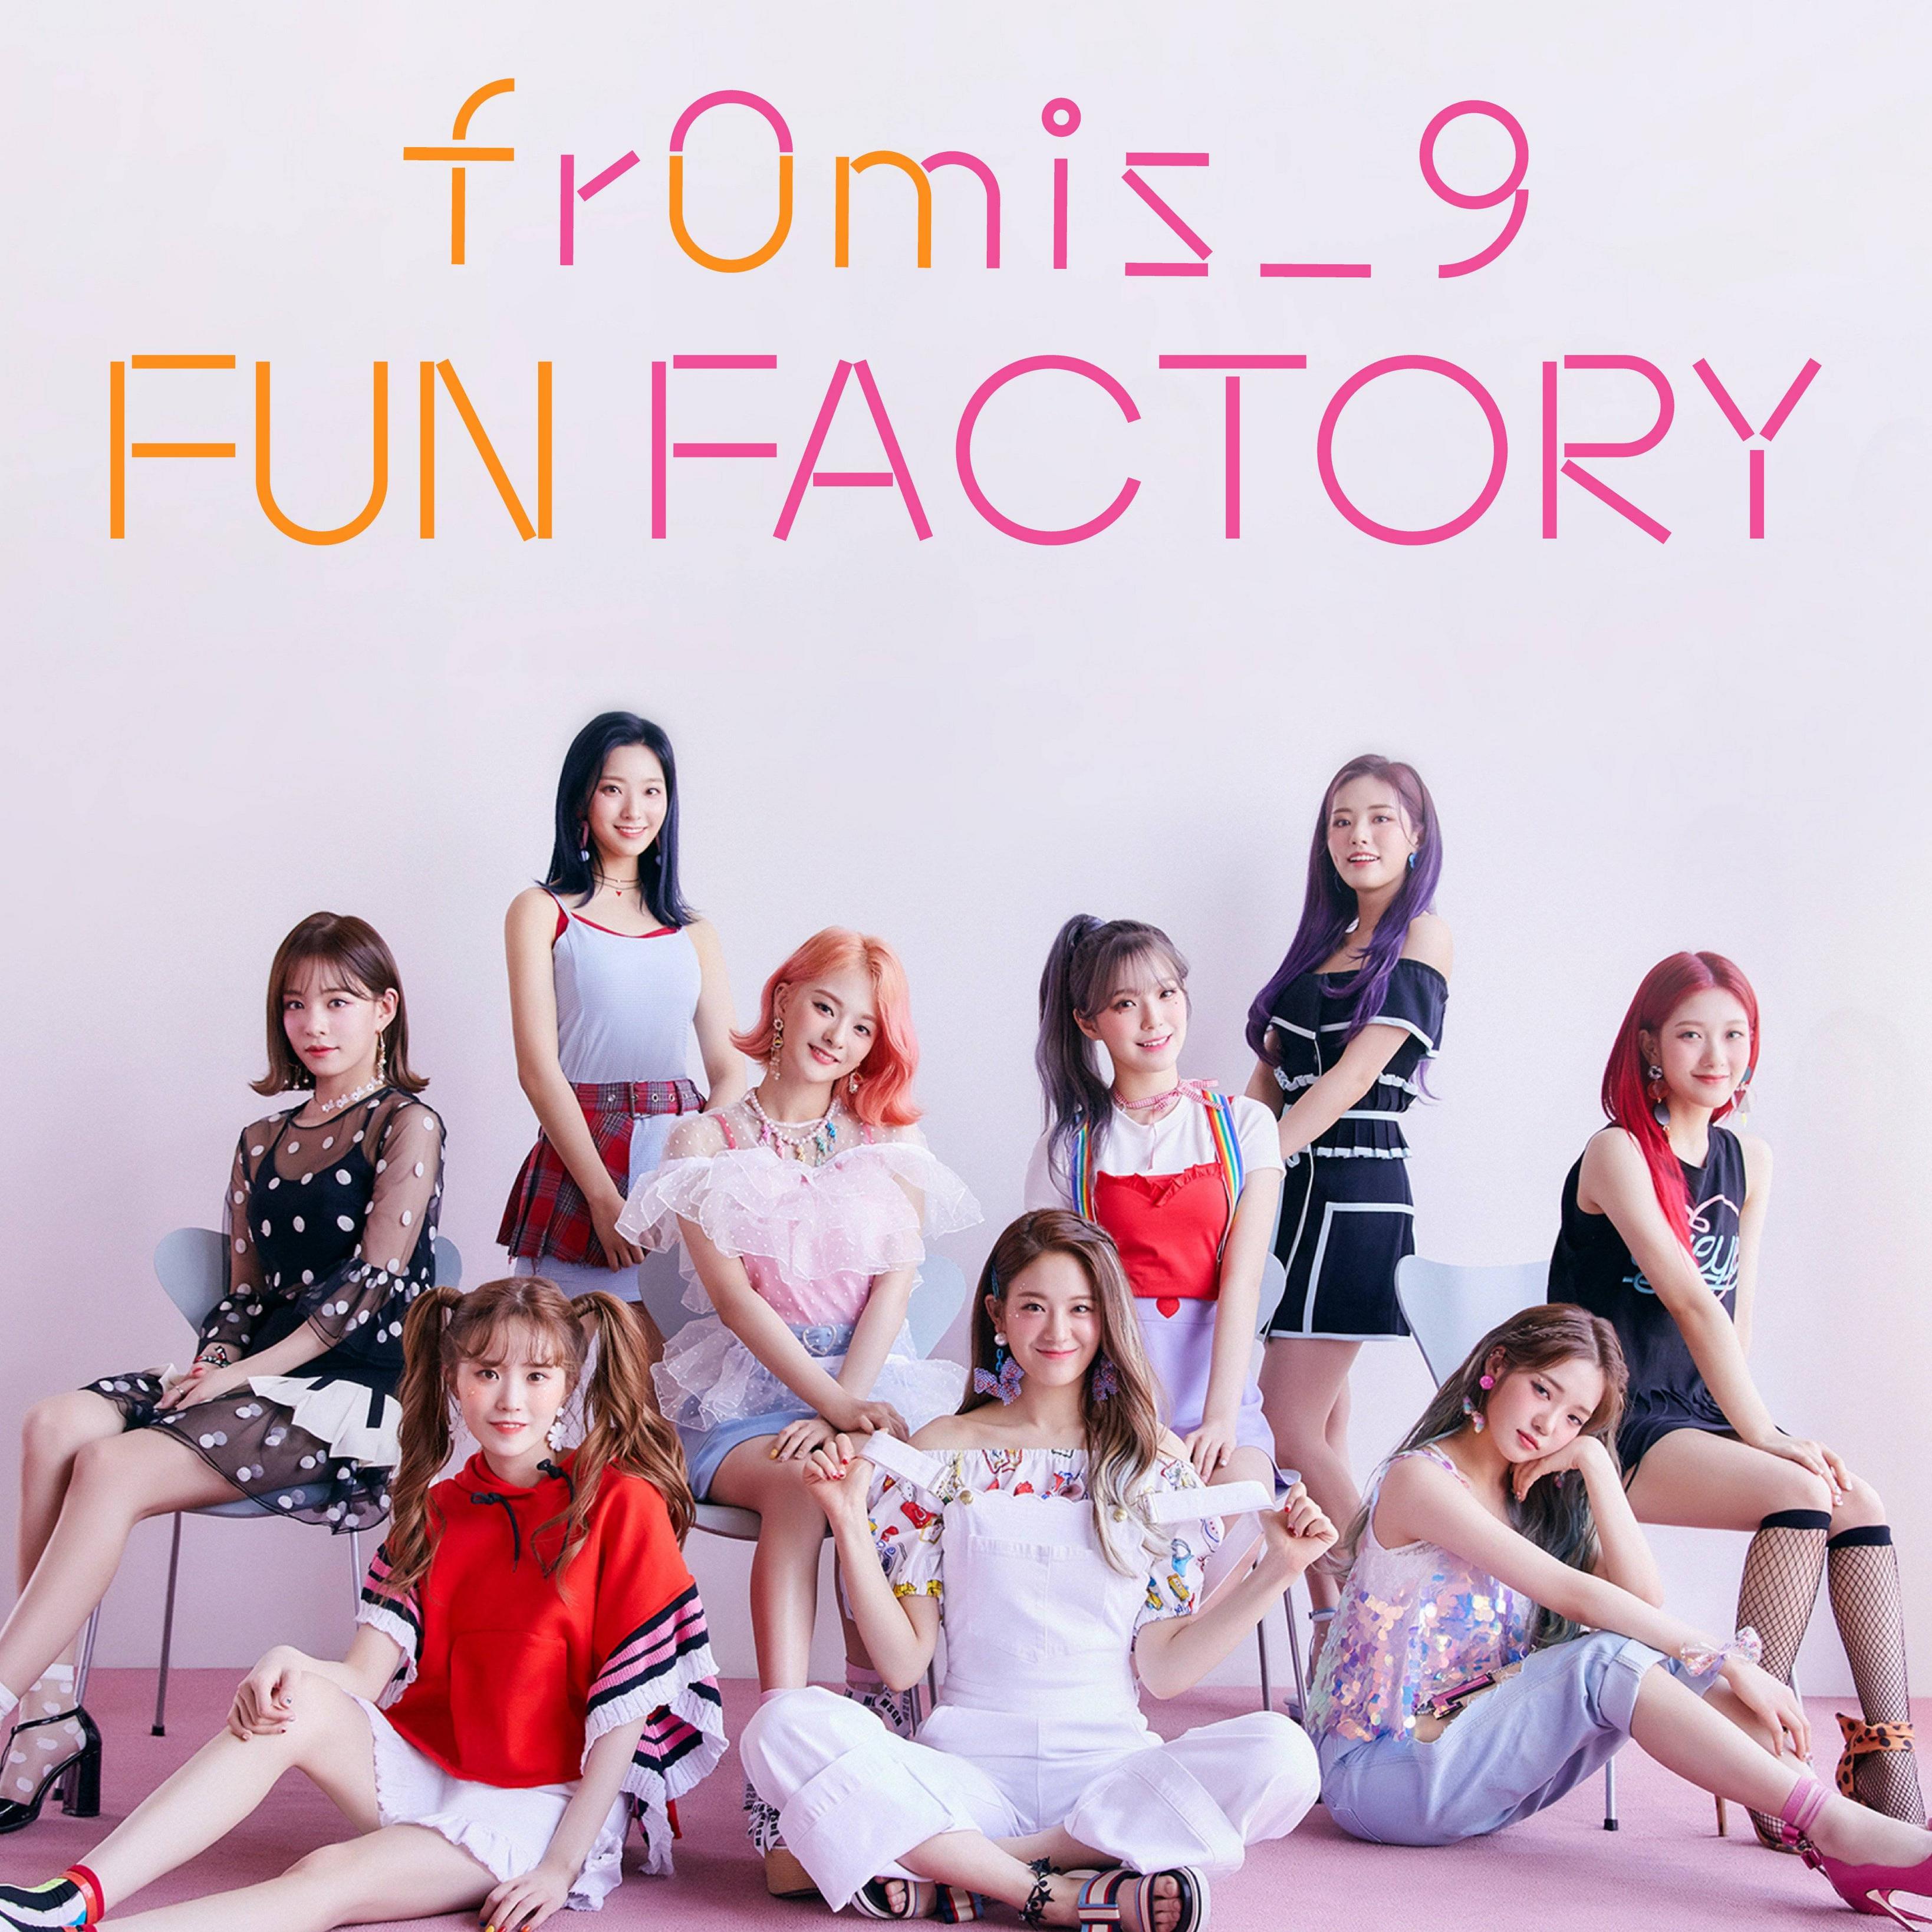 fromis_9 Factory (Album Cover)